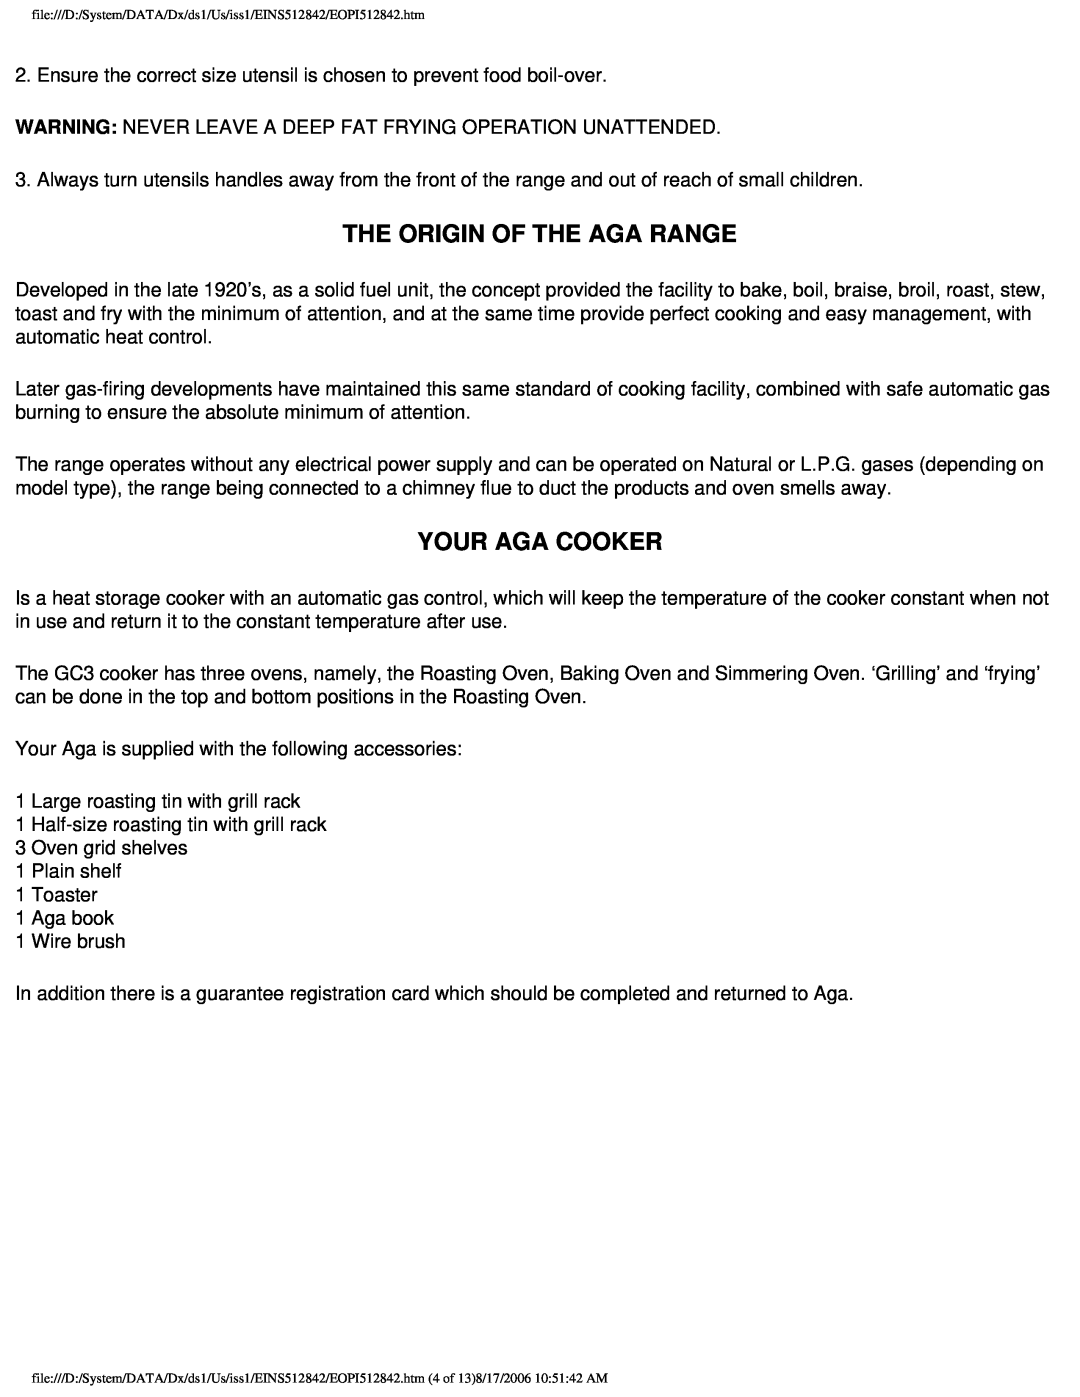 Aga Ranges GC3 manual The Origin Of The Aga Range, Your Aga Cooker 